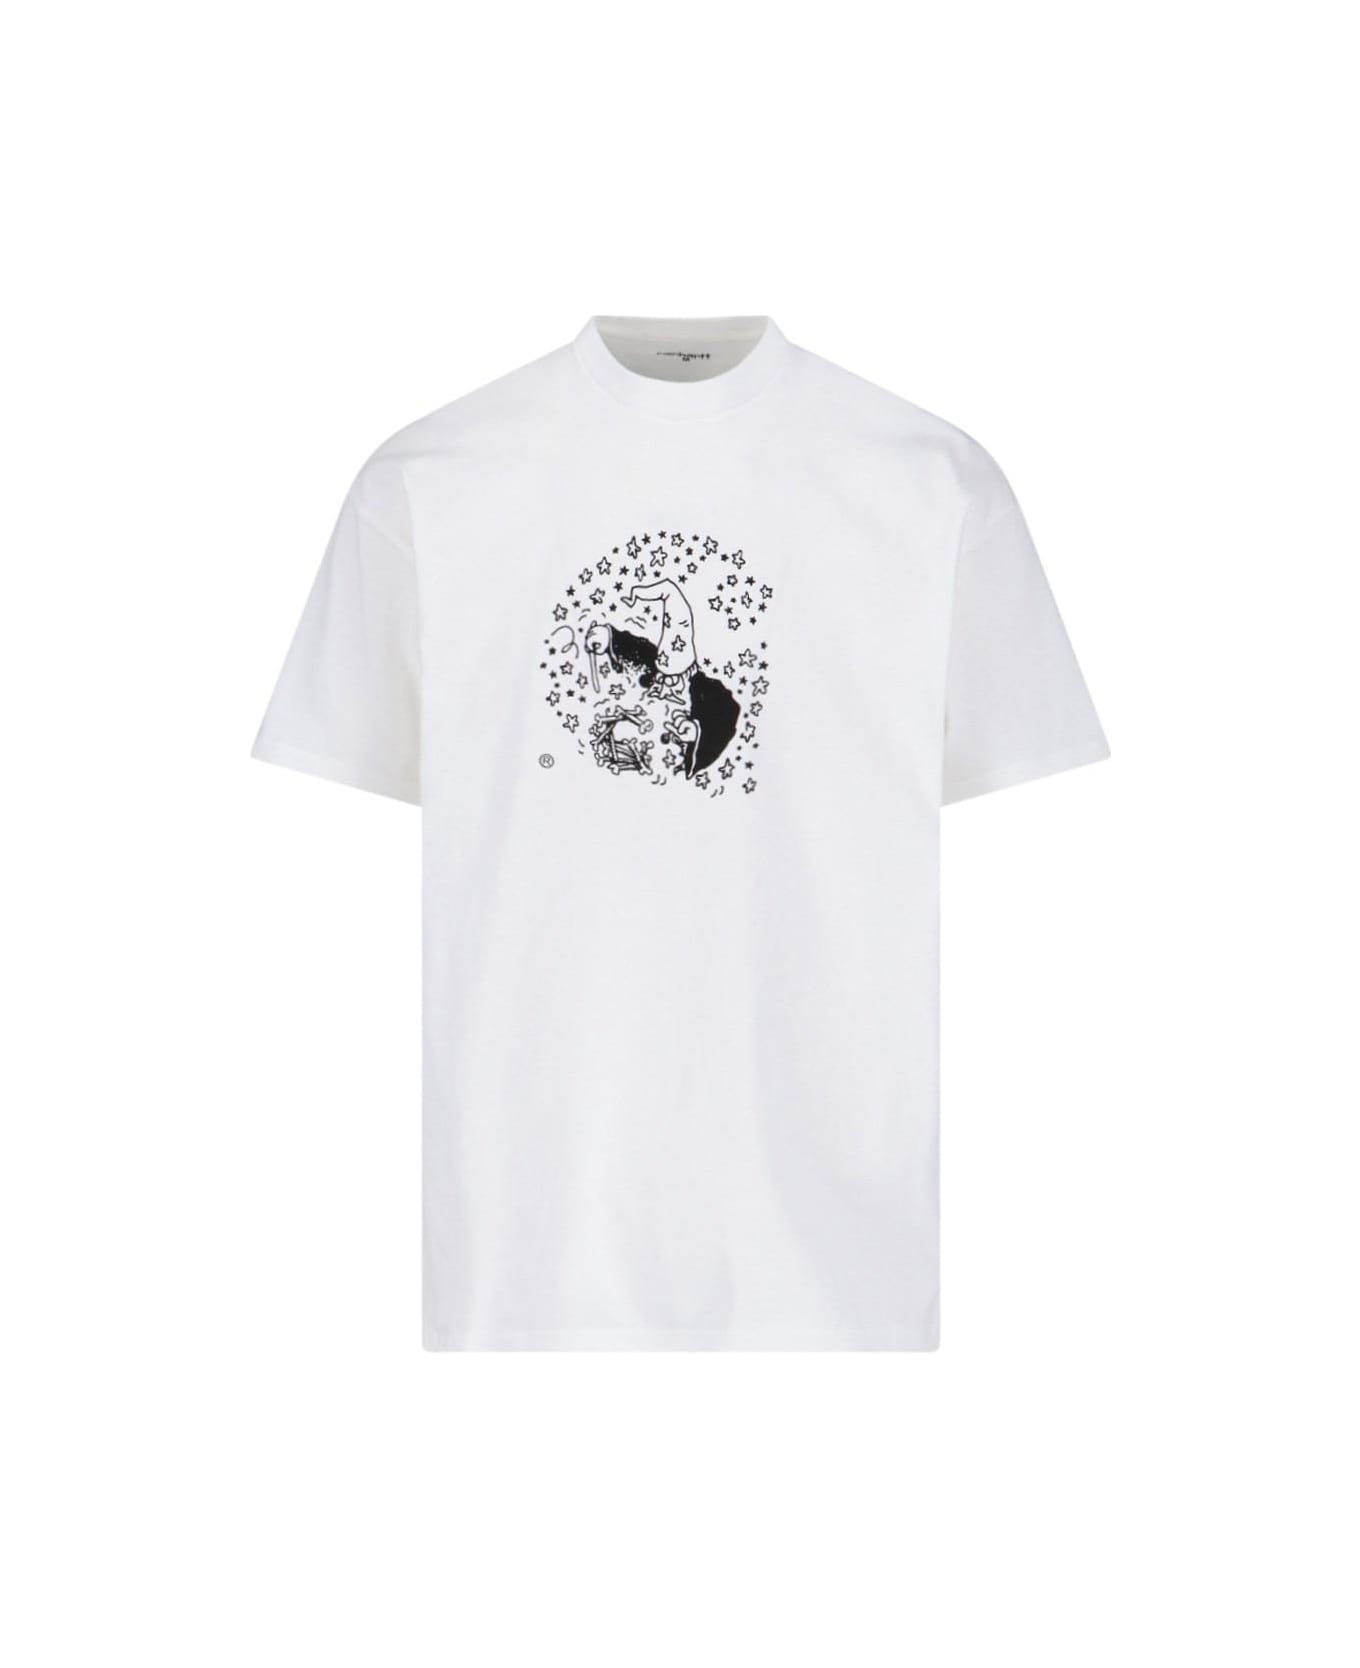 Carhartt 's/s Hocus Pocus' Print T-shirt - Axx White Black